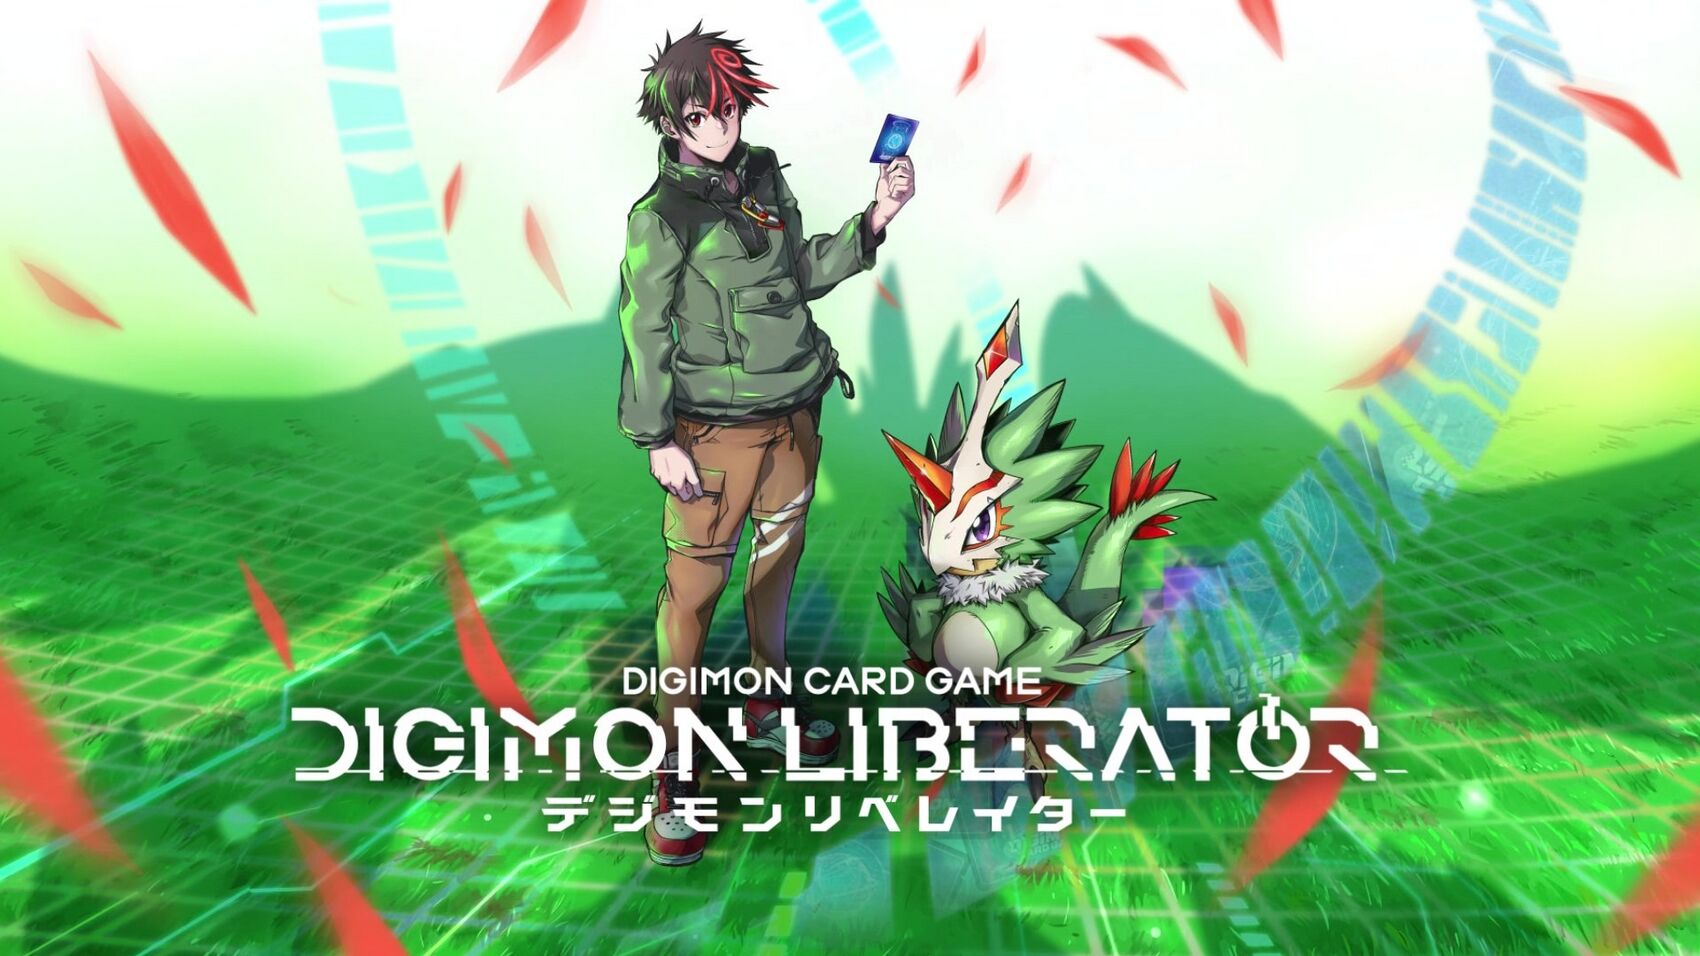 Digimonliberator promo art2.jpg